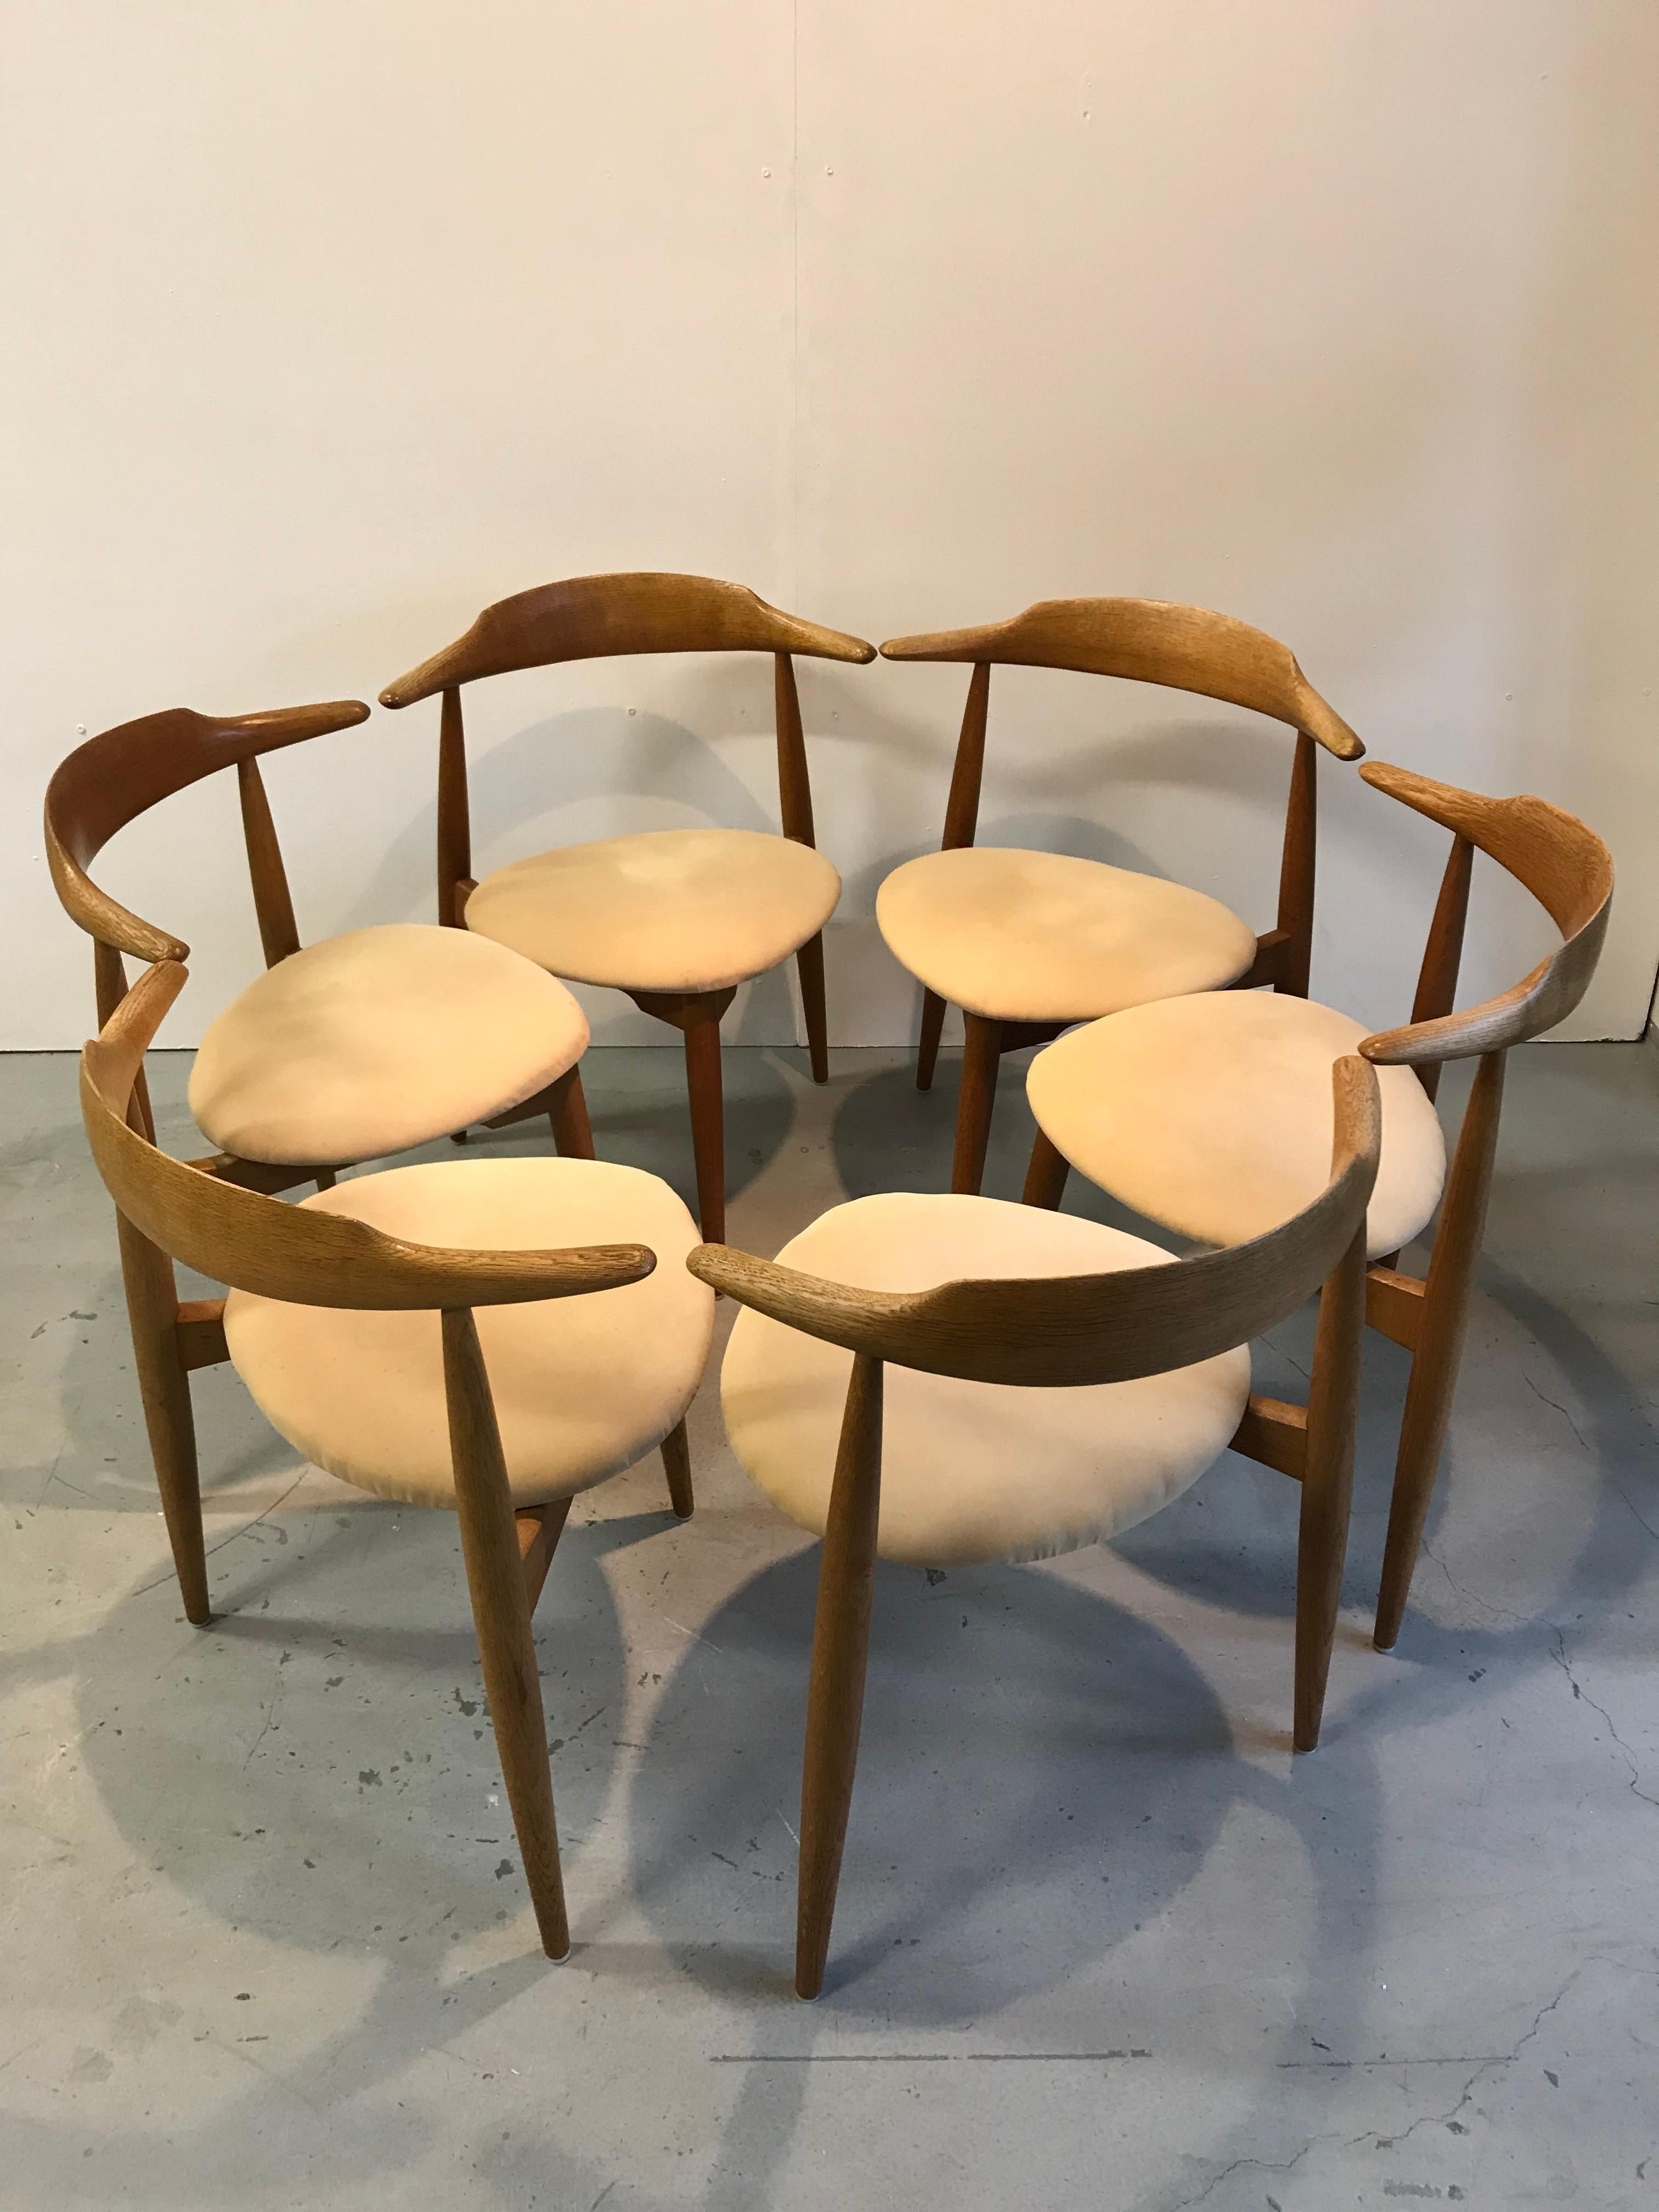 6 tripod oak wooden dining chairs designed by Wegner for Fritz Hansen, Denmark.
Nice vintage condition.